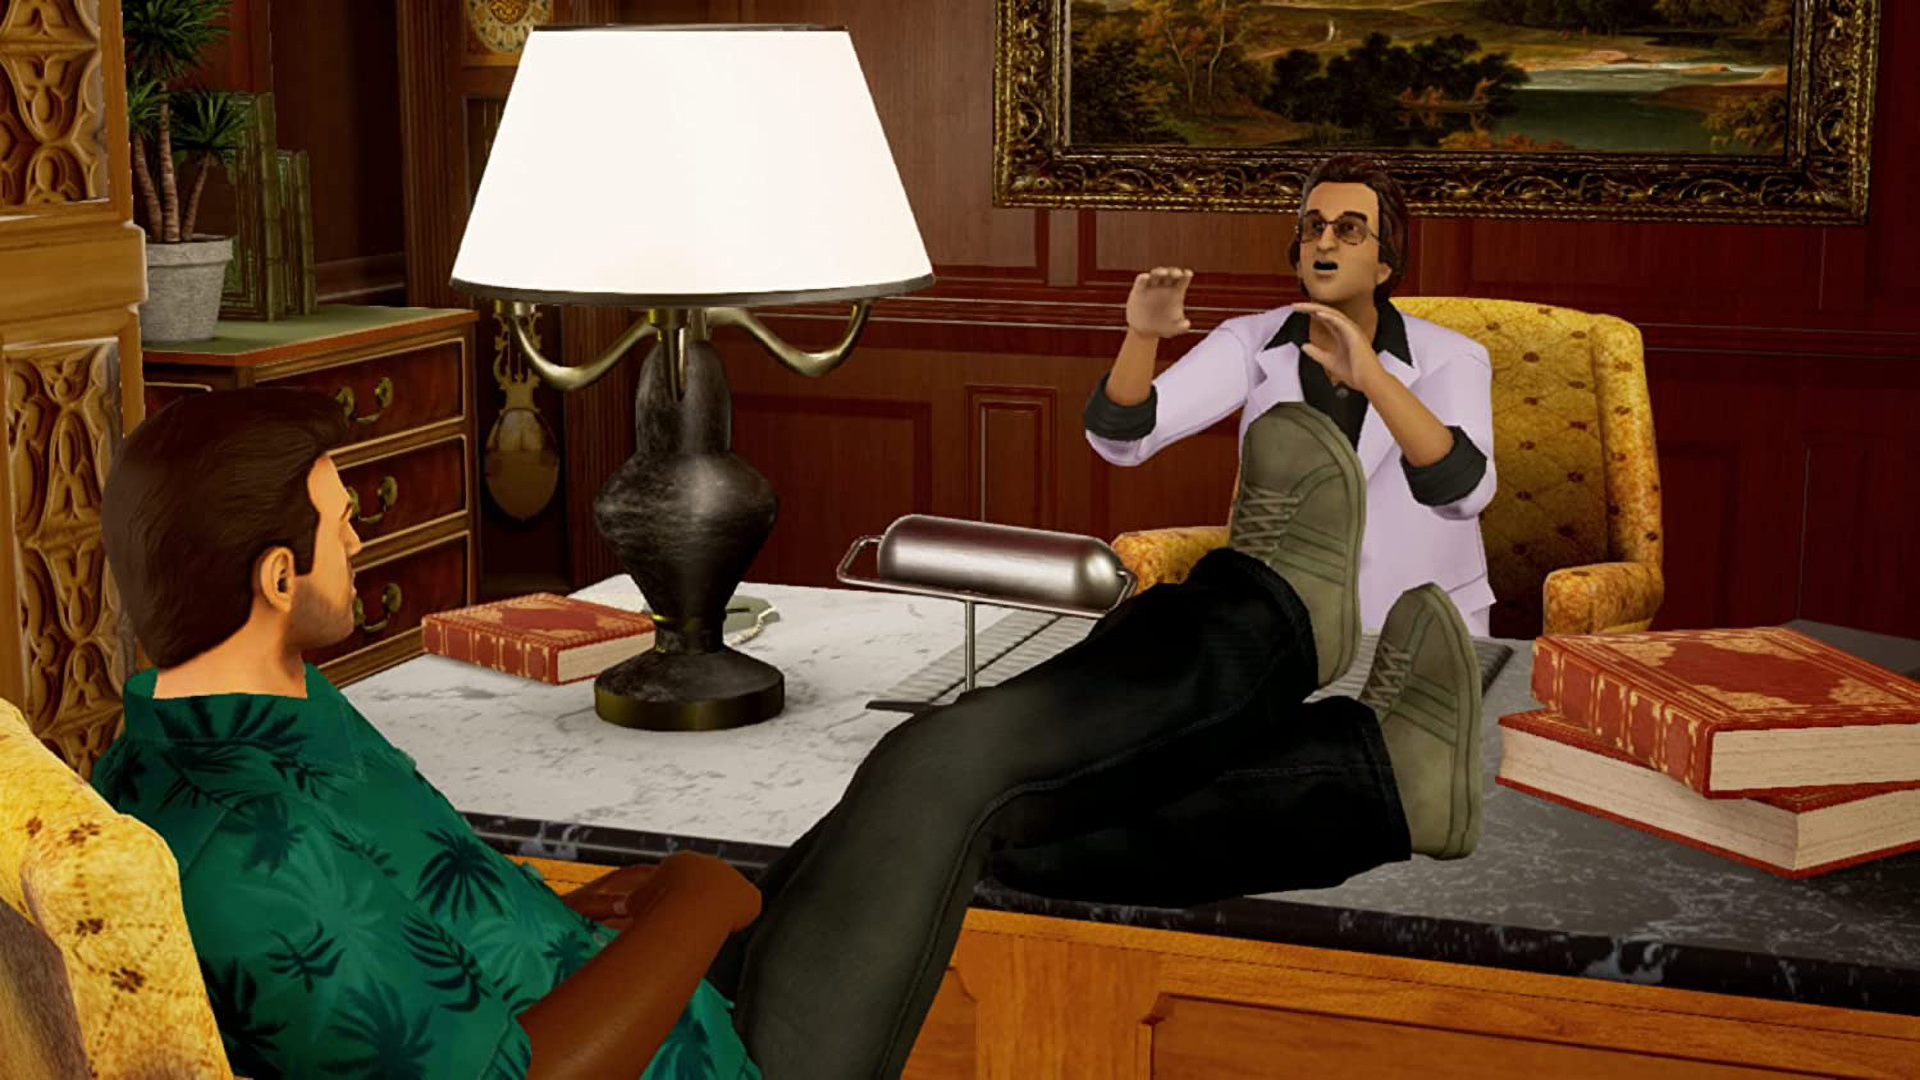 Jogo Grand Theft Auto: The Trilogy - Nintendo Switch